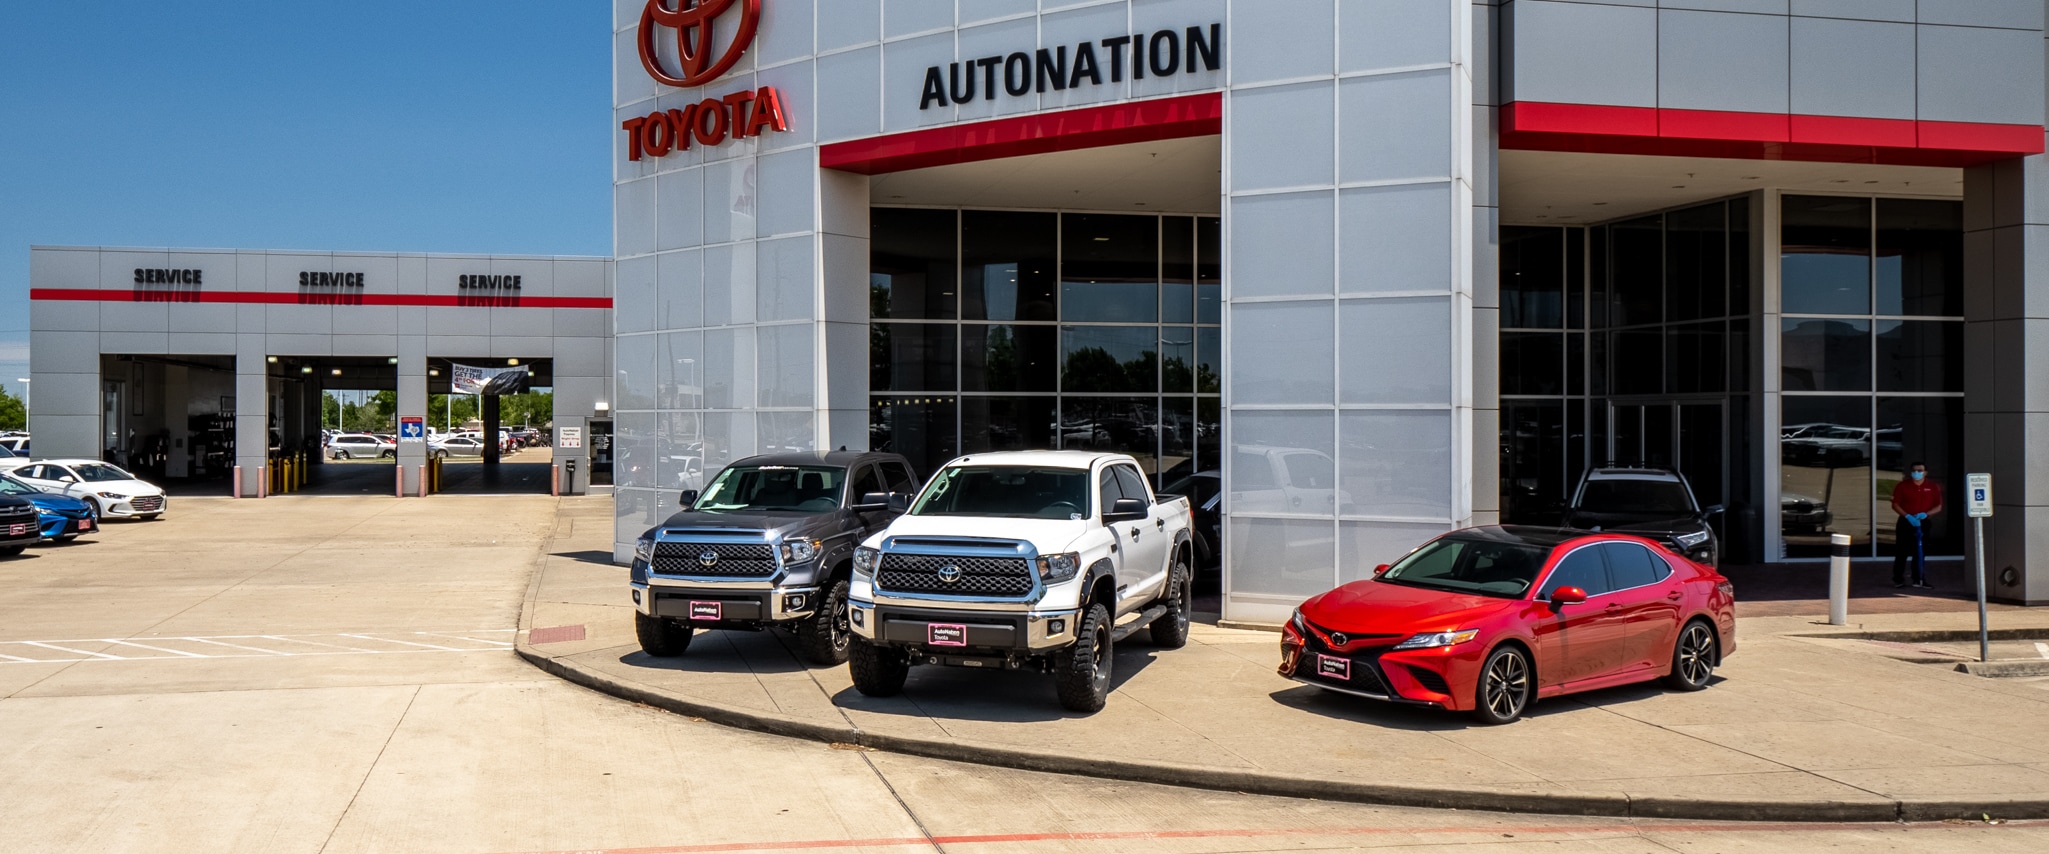 Toyota Dealership Near Me in Houston, TX | AutoNation ...